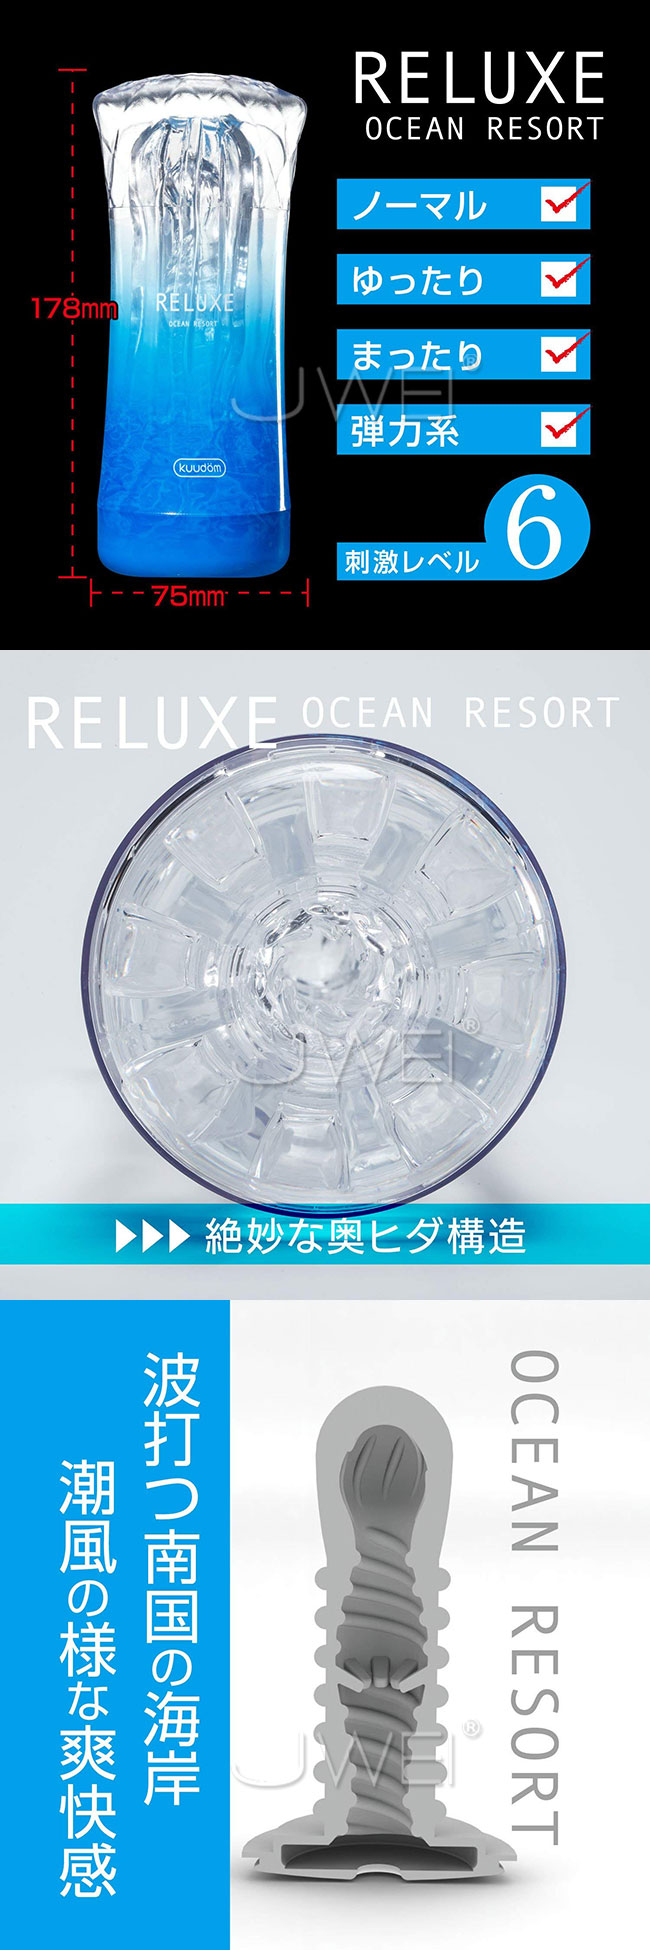 日本NPG．RELUXE 海洋渡假村OCEAN RESORT 可重覆使用飛機杯